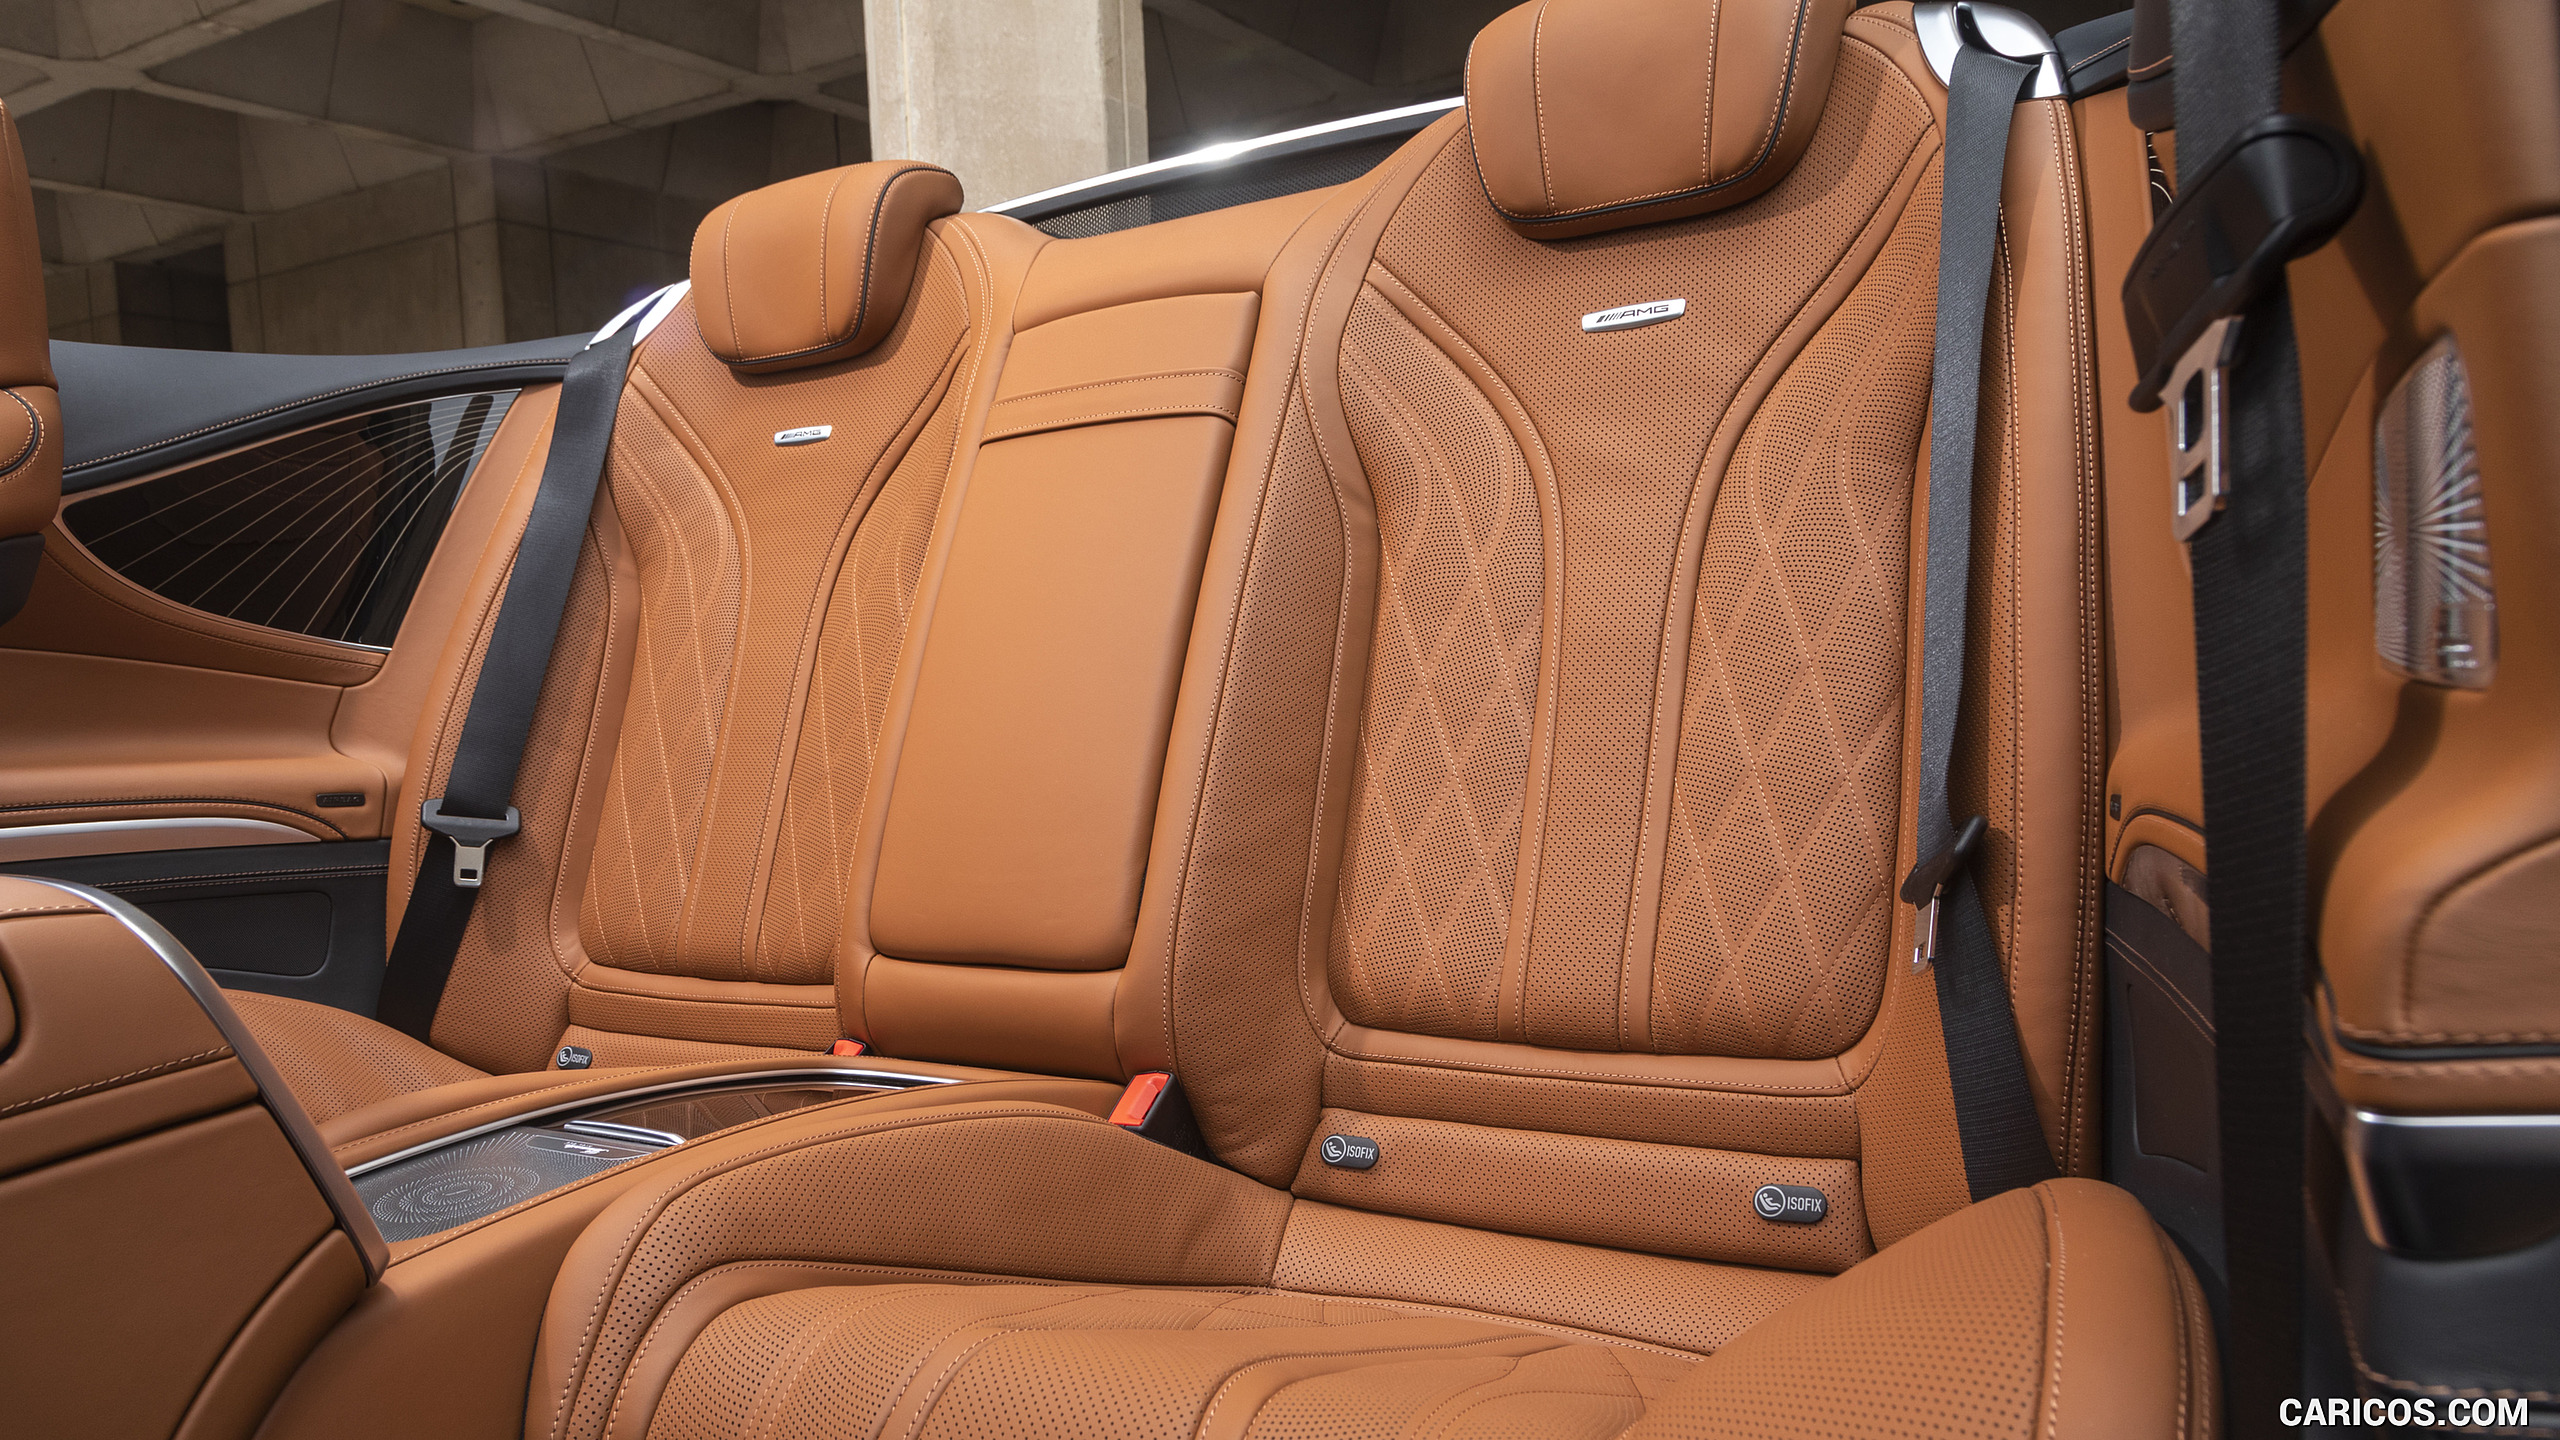 2020 Mercedes-AMG S 63 Cabriolet (US-Spec) - Interior, Rear Seats, #46 of 47